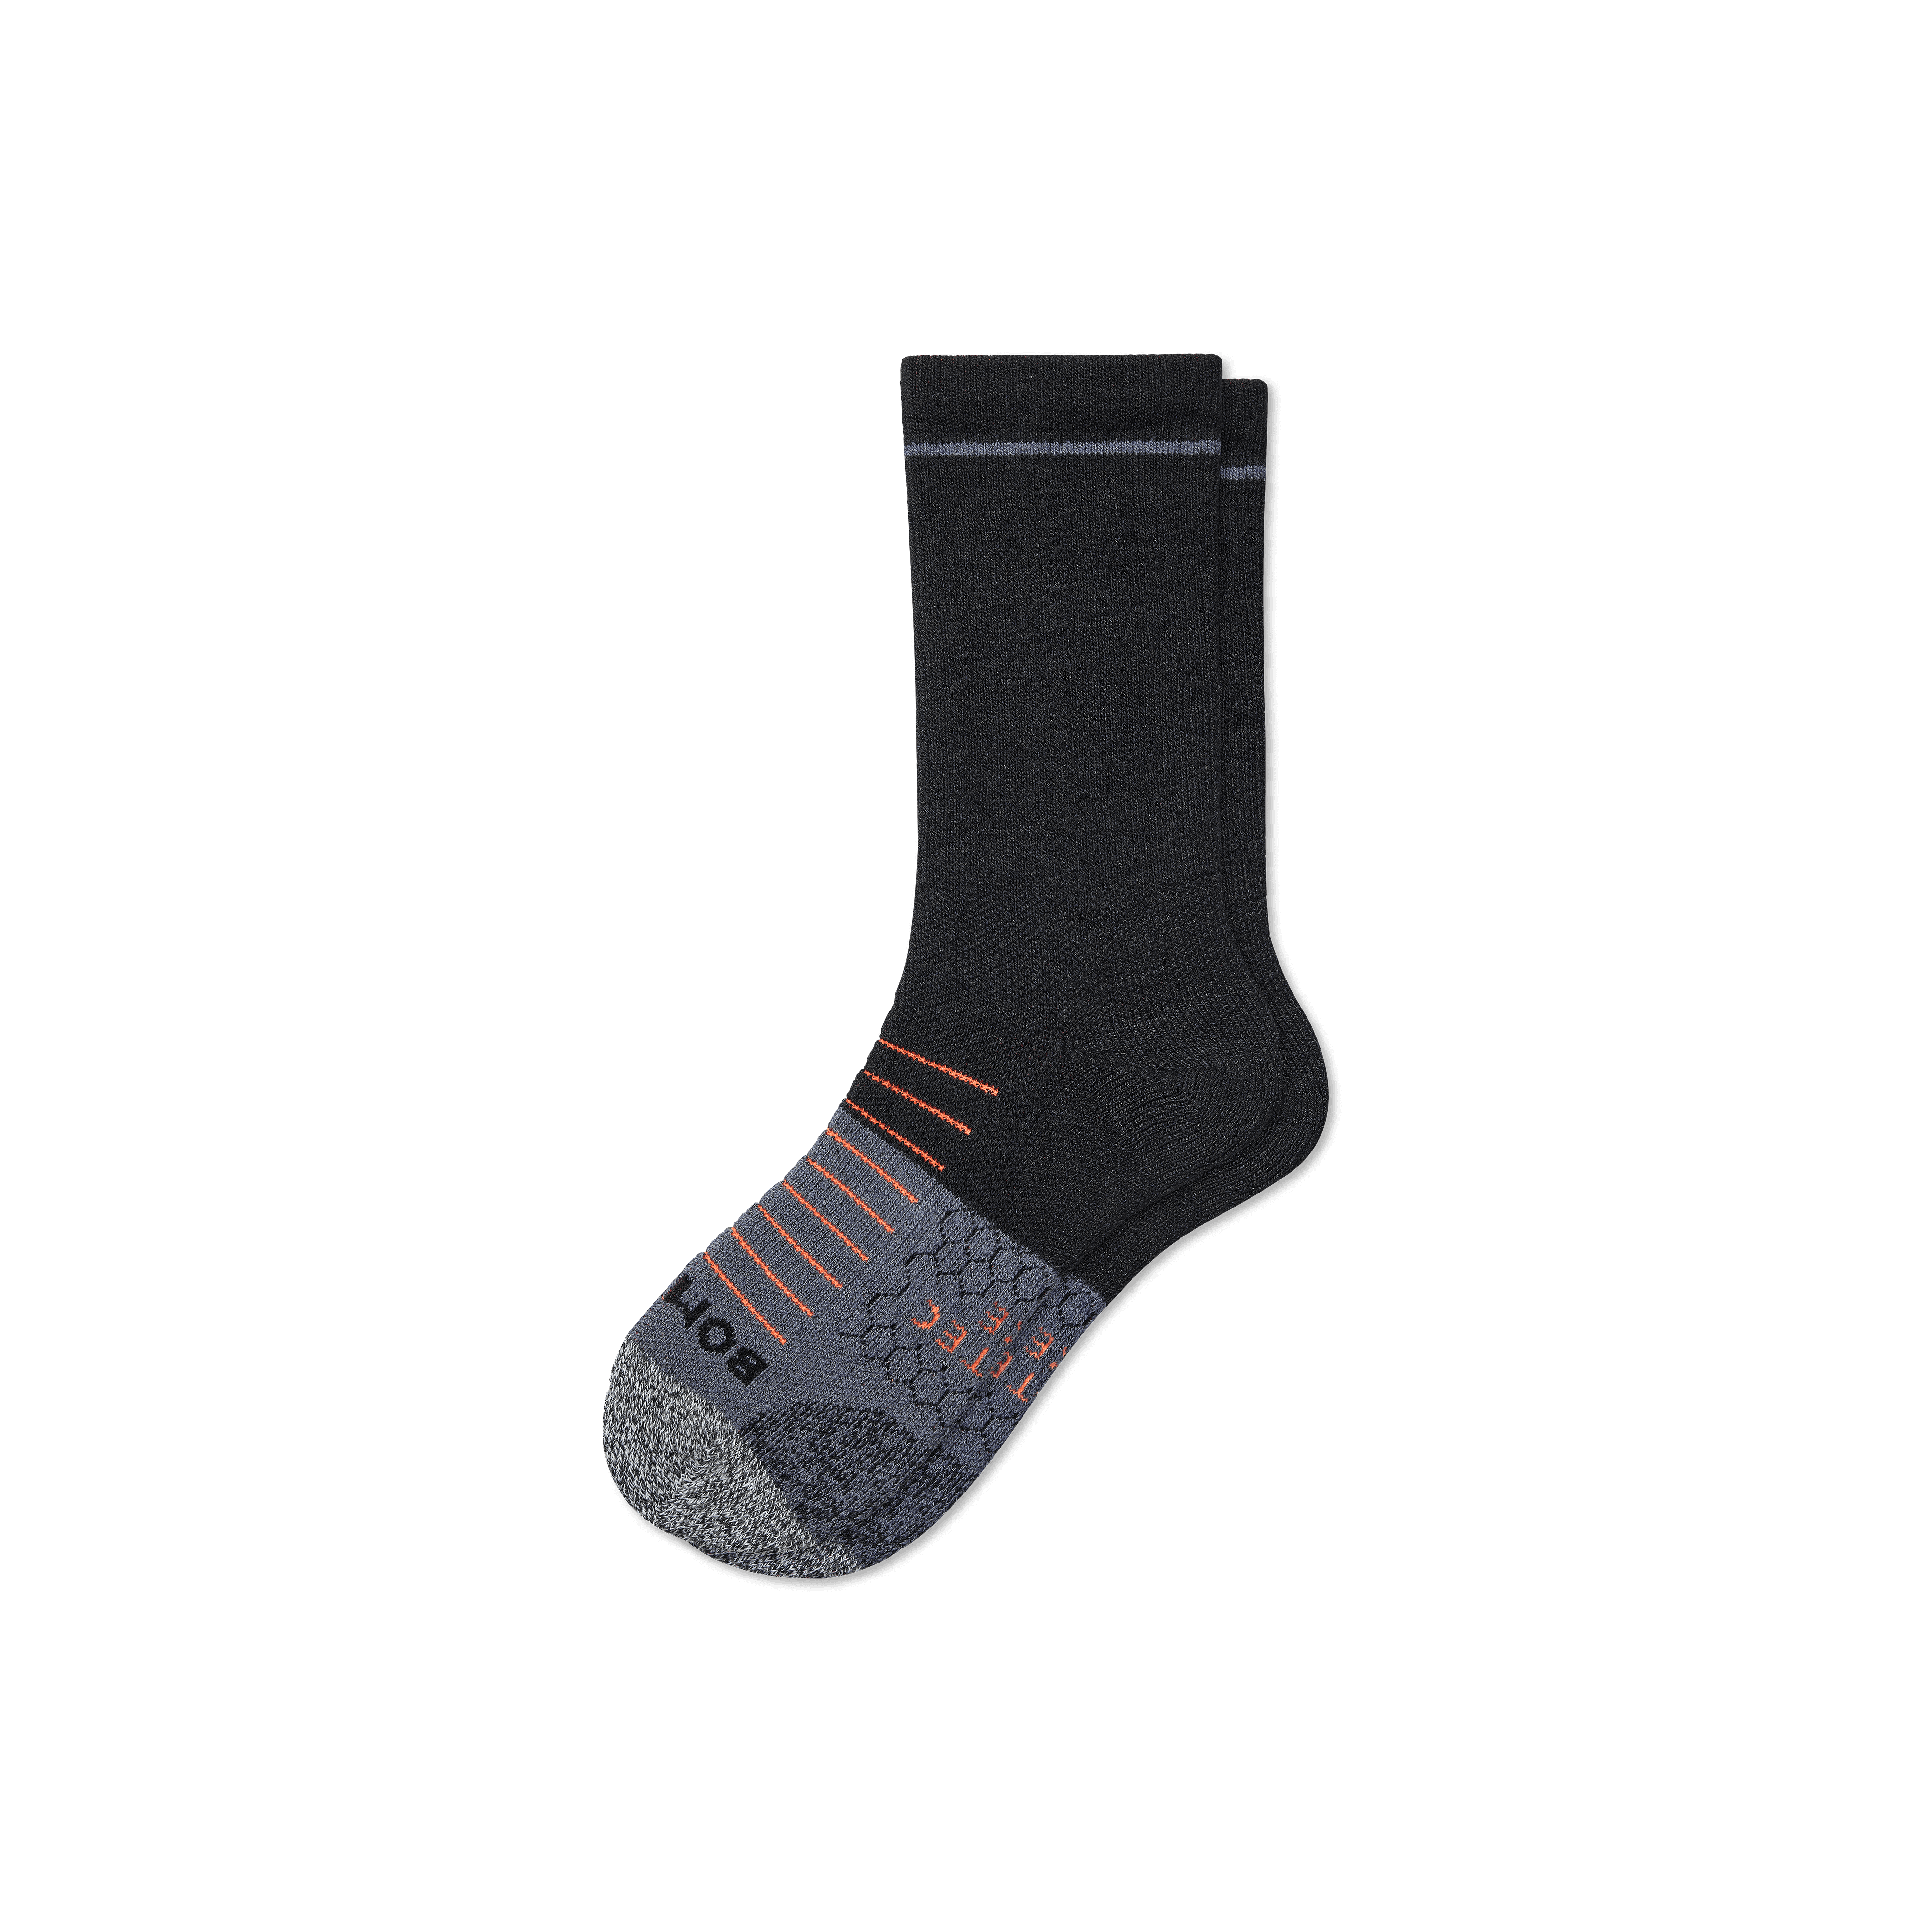 Bombas Hiking Performance Calf Socks In Black